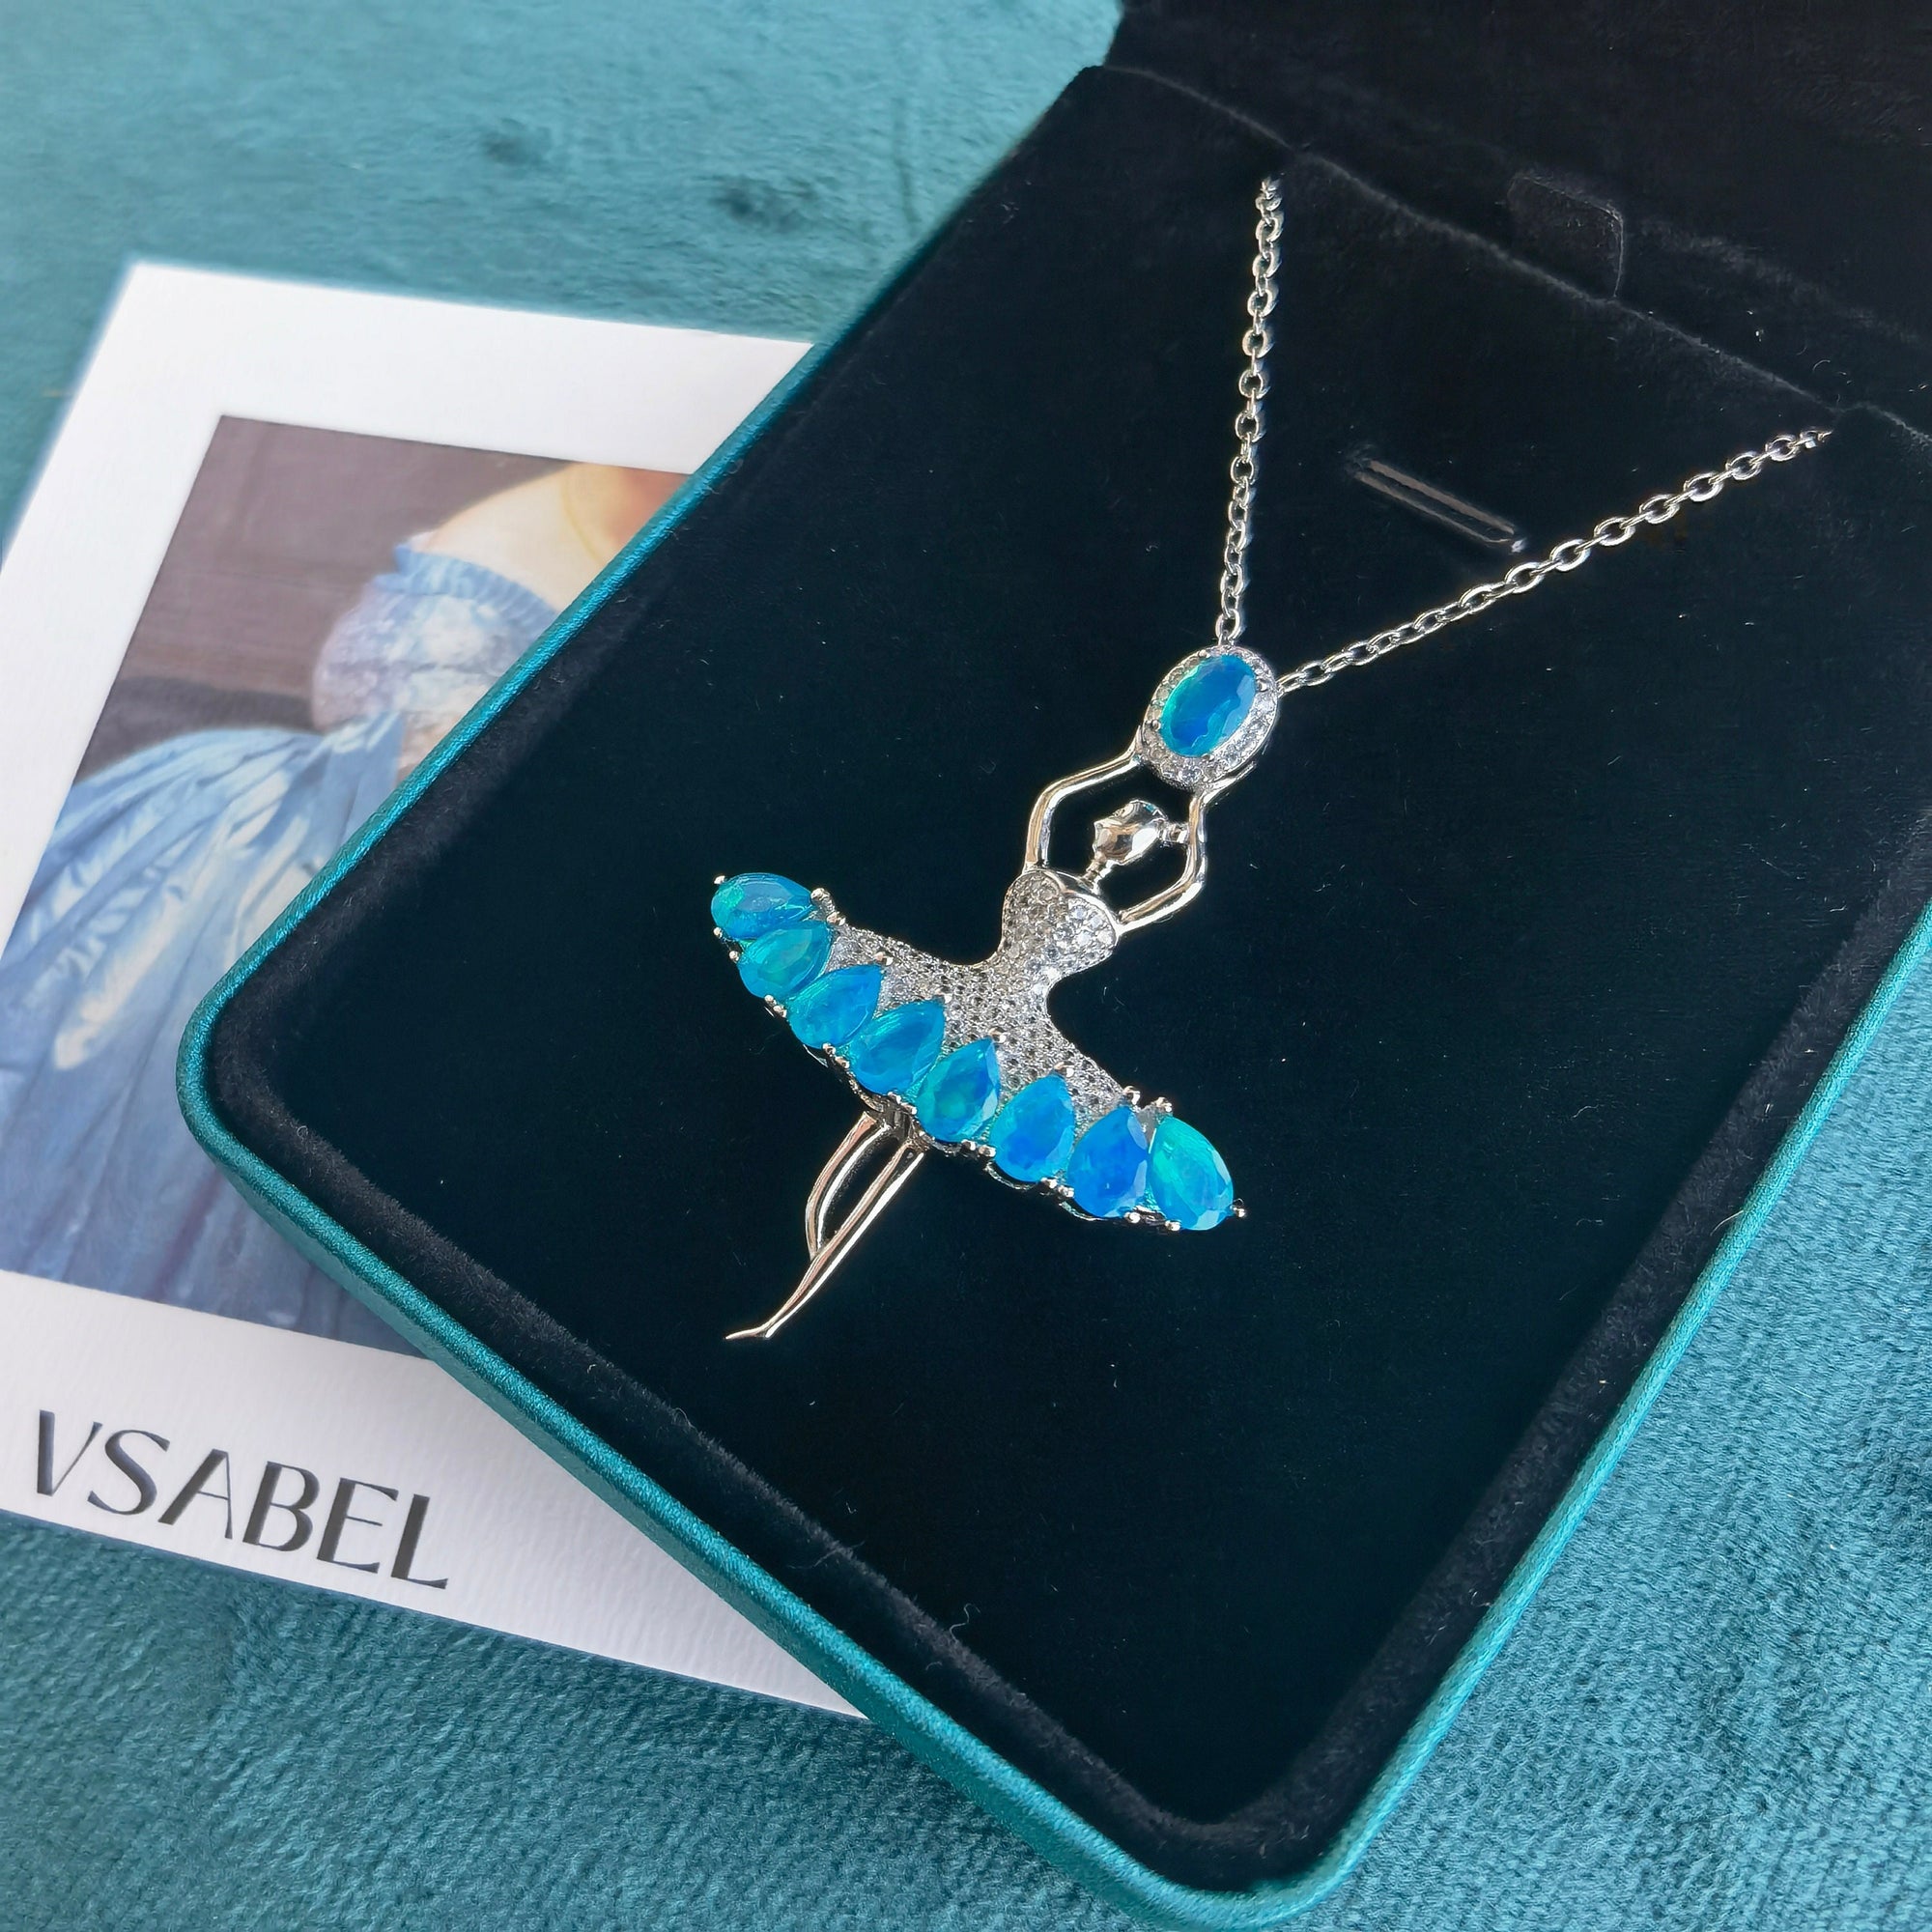 Blue opal pendant, one of kind opal pendant necklace, handmade opal pendant, sterling silver, lab create blue opal-Vsabel Jewellery